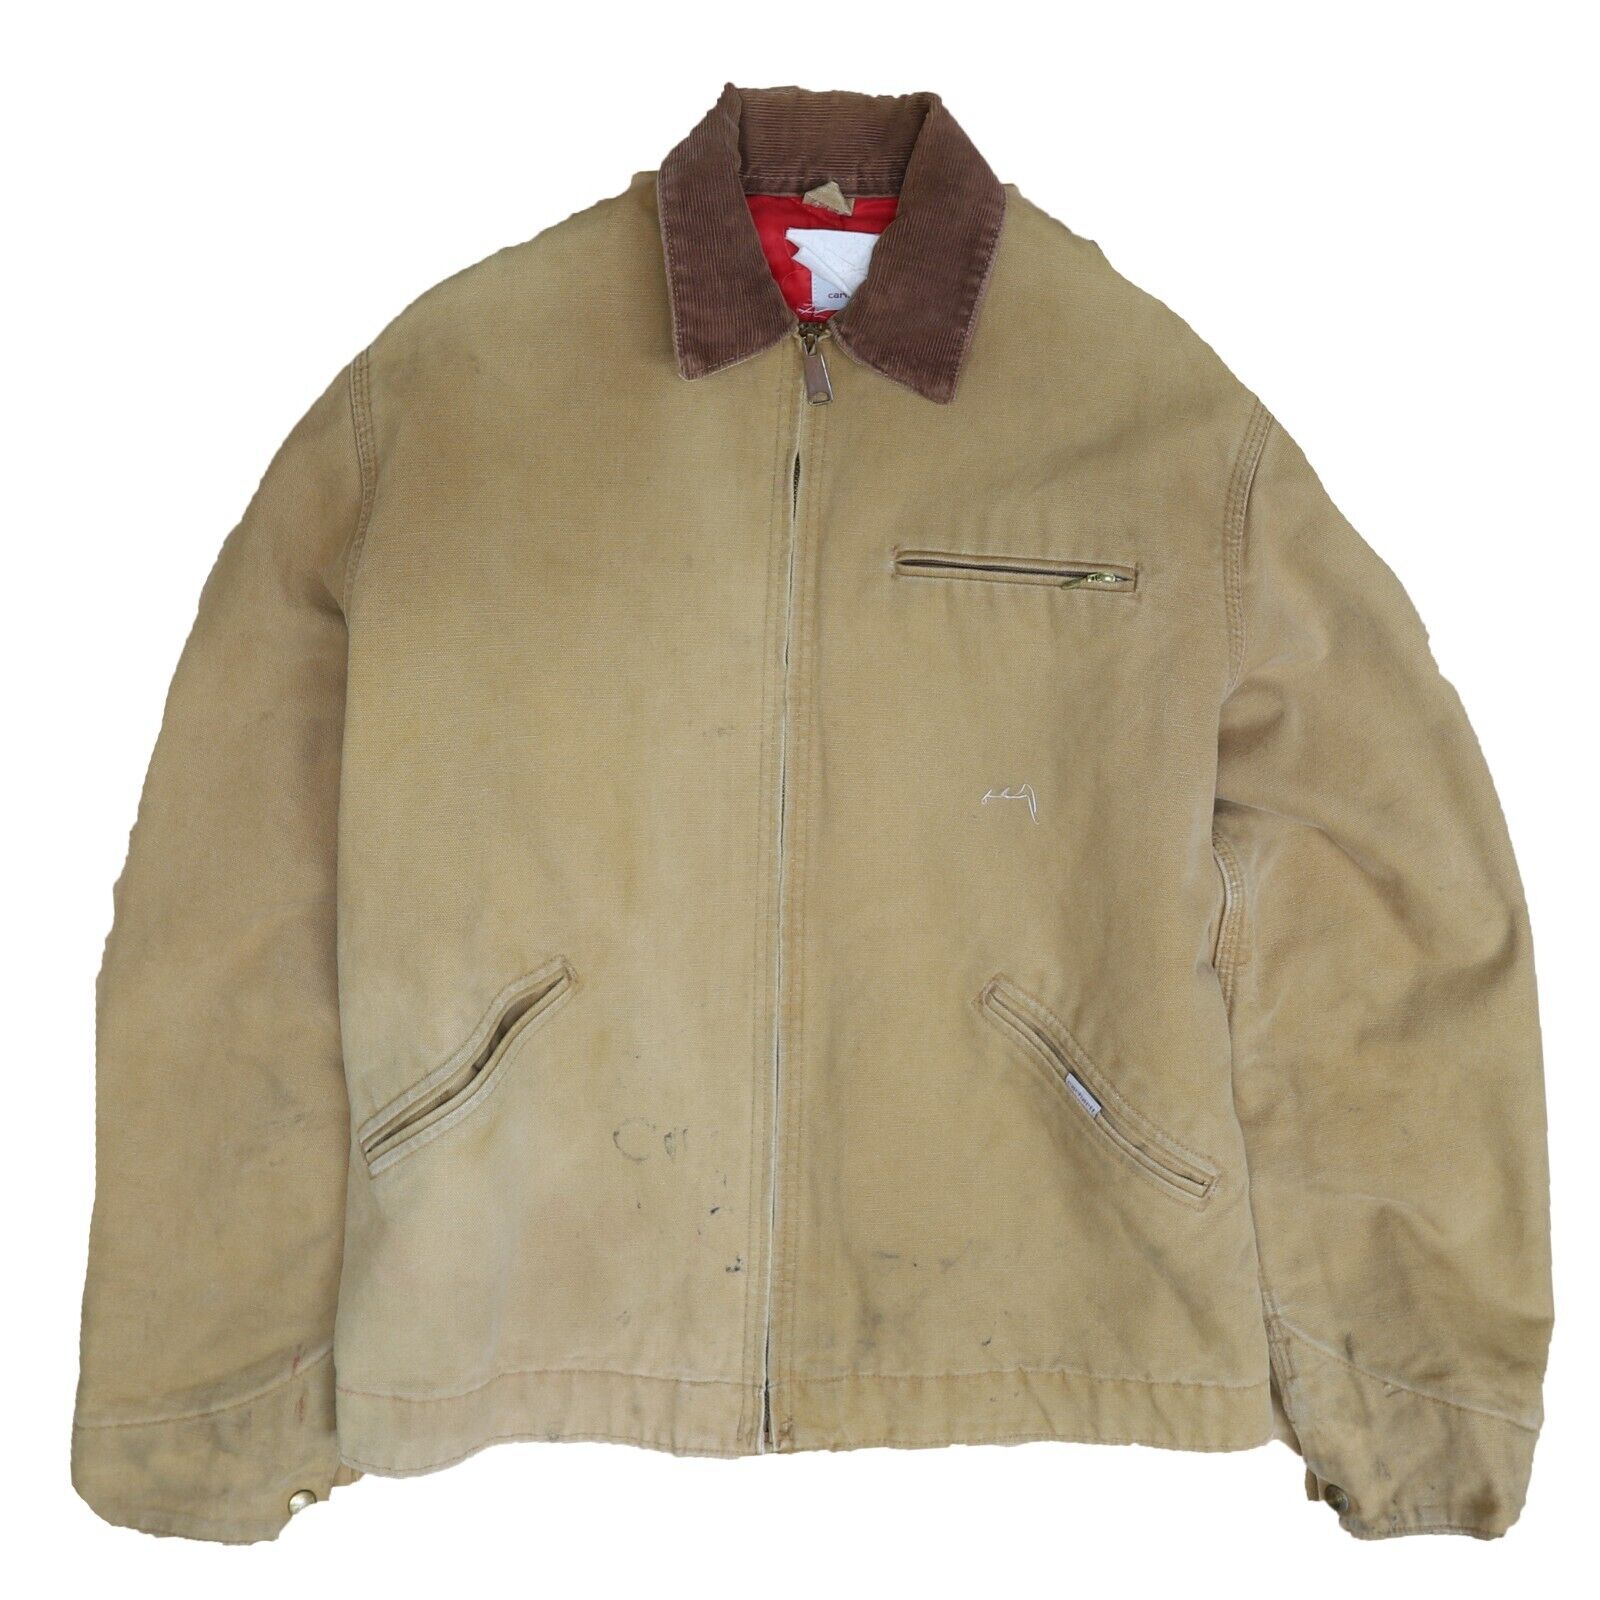 Vintage Carhartt Canvas Detroit Work Jacket Size 42 Tall Tan Brown ...